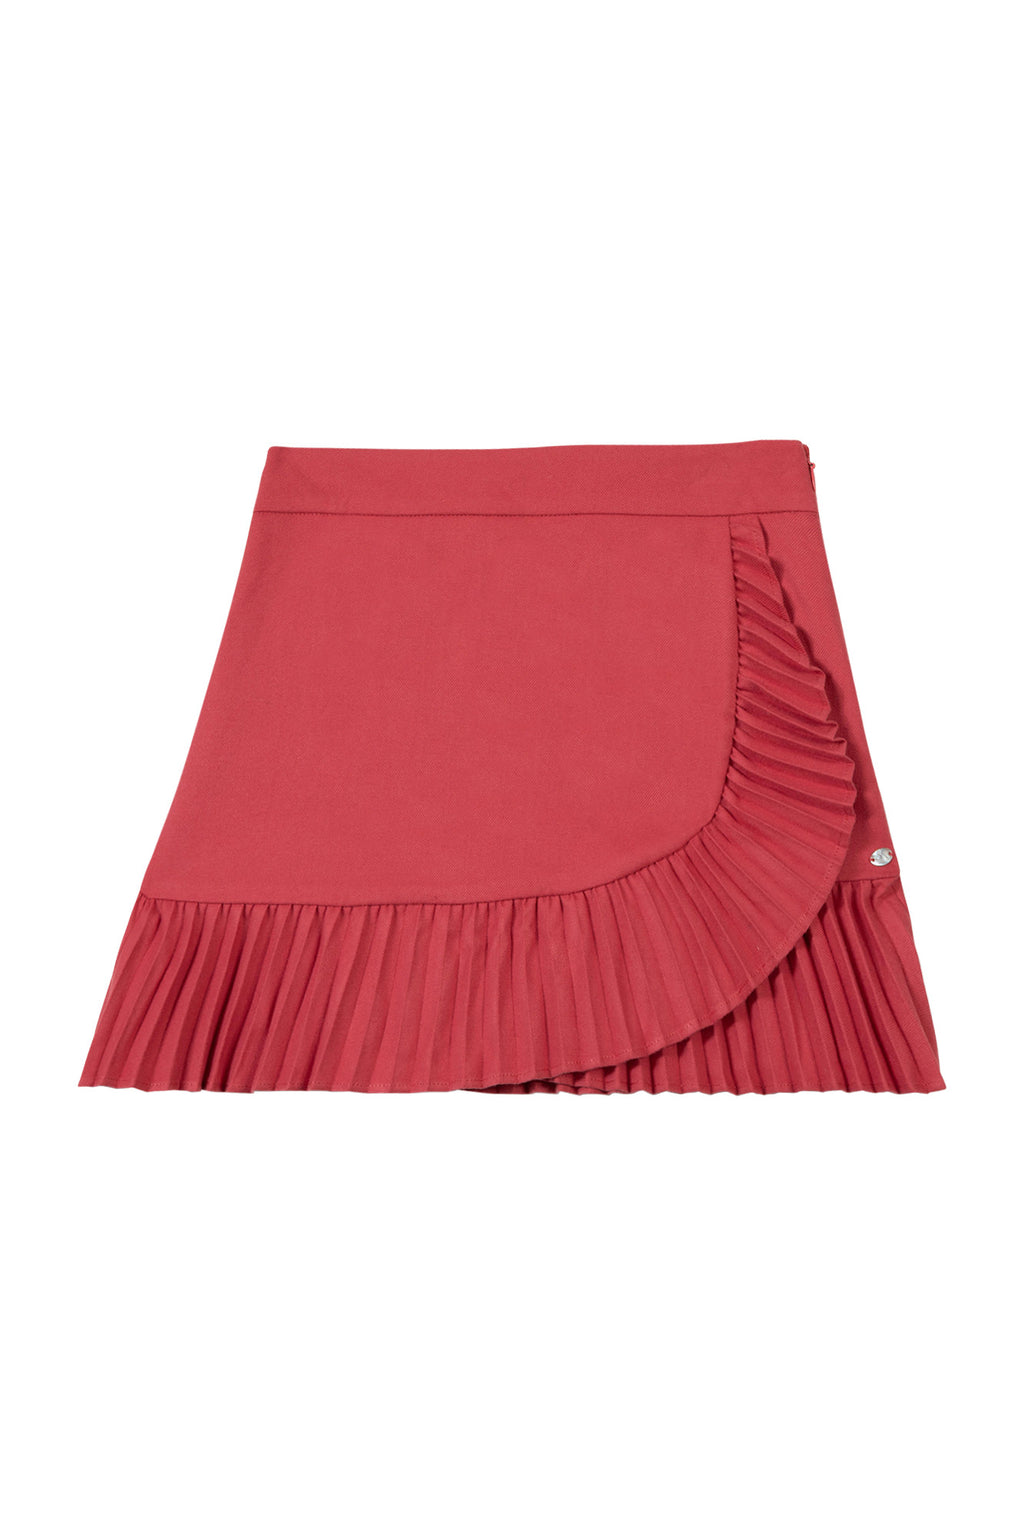 Skirt - Raspberry Flannel pleated